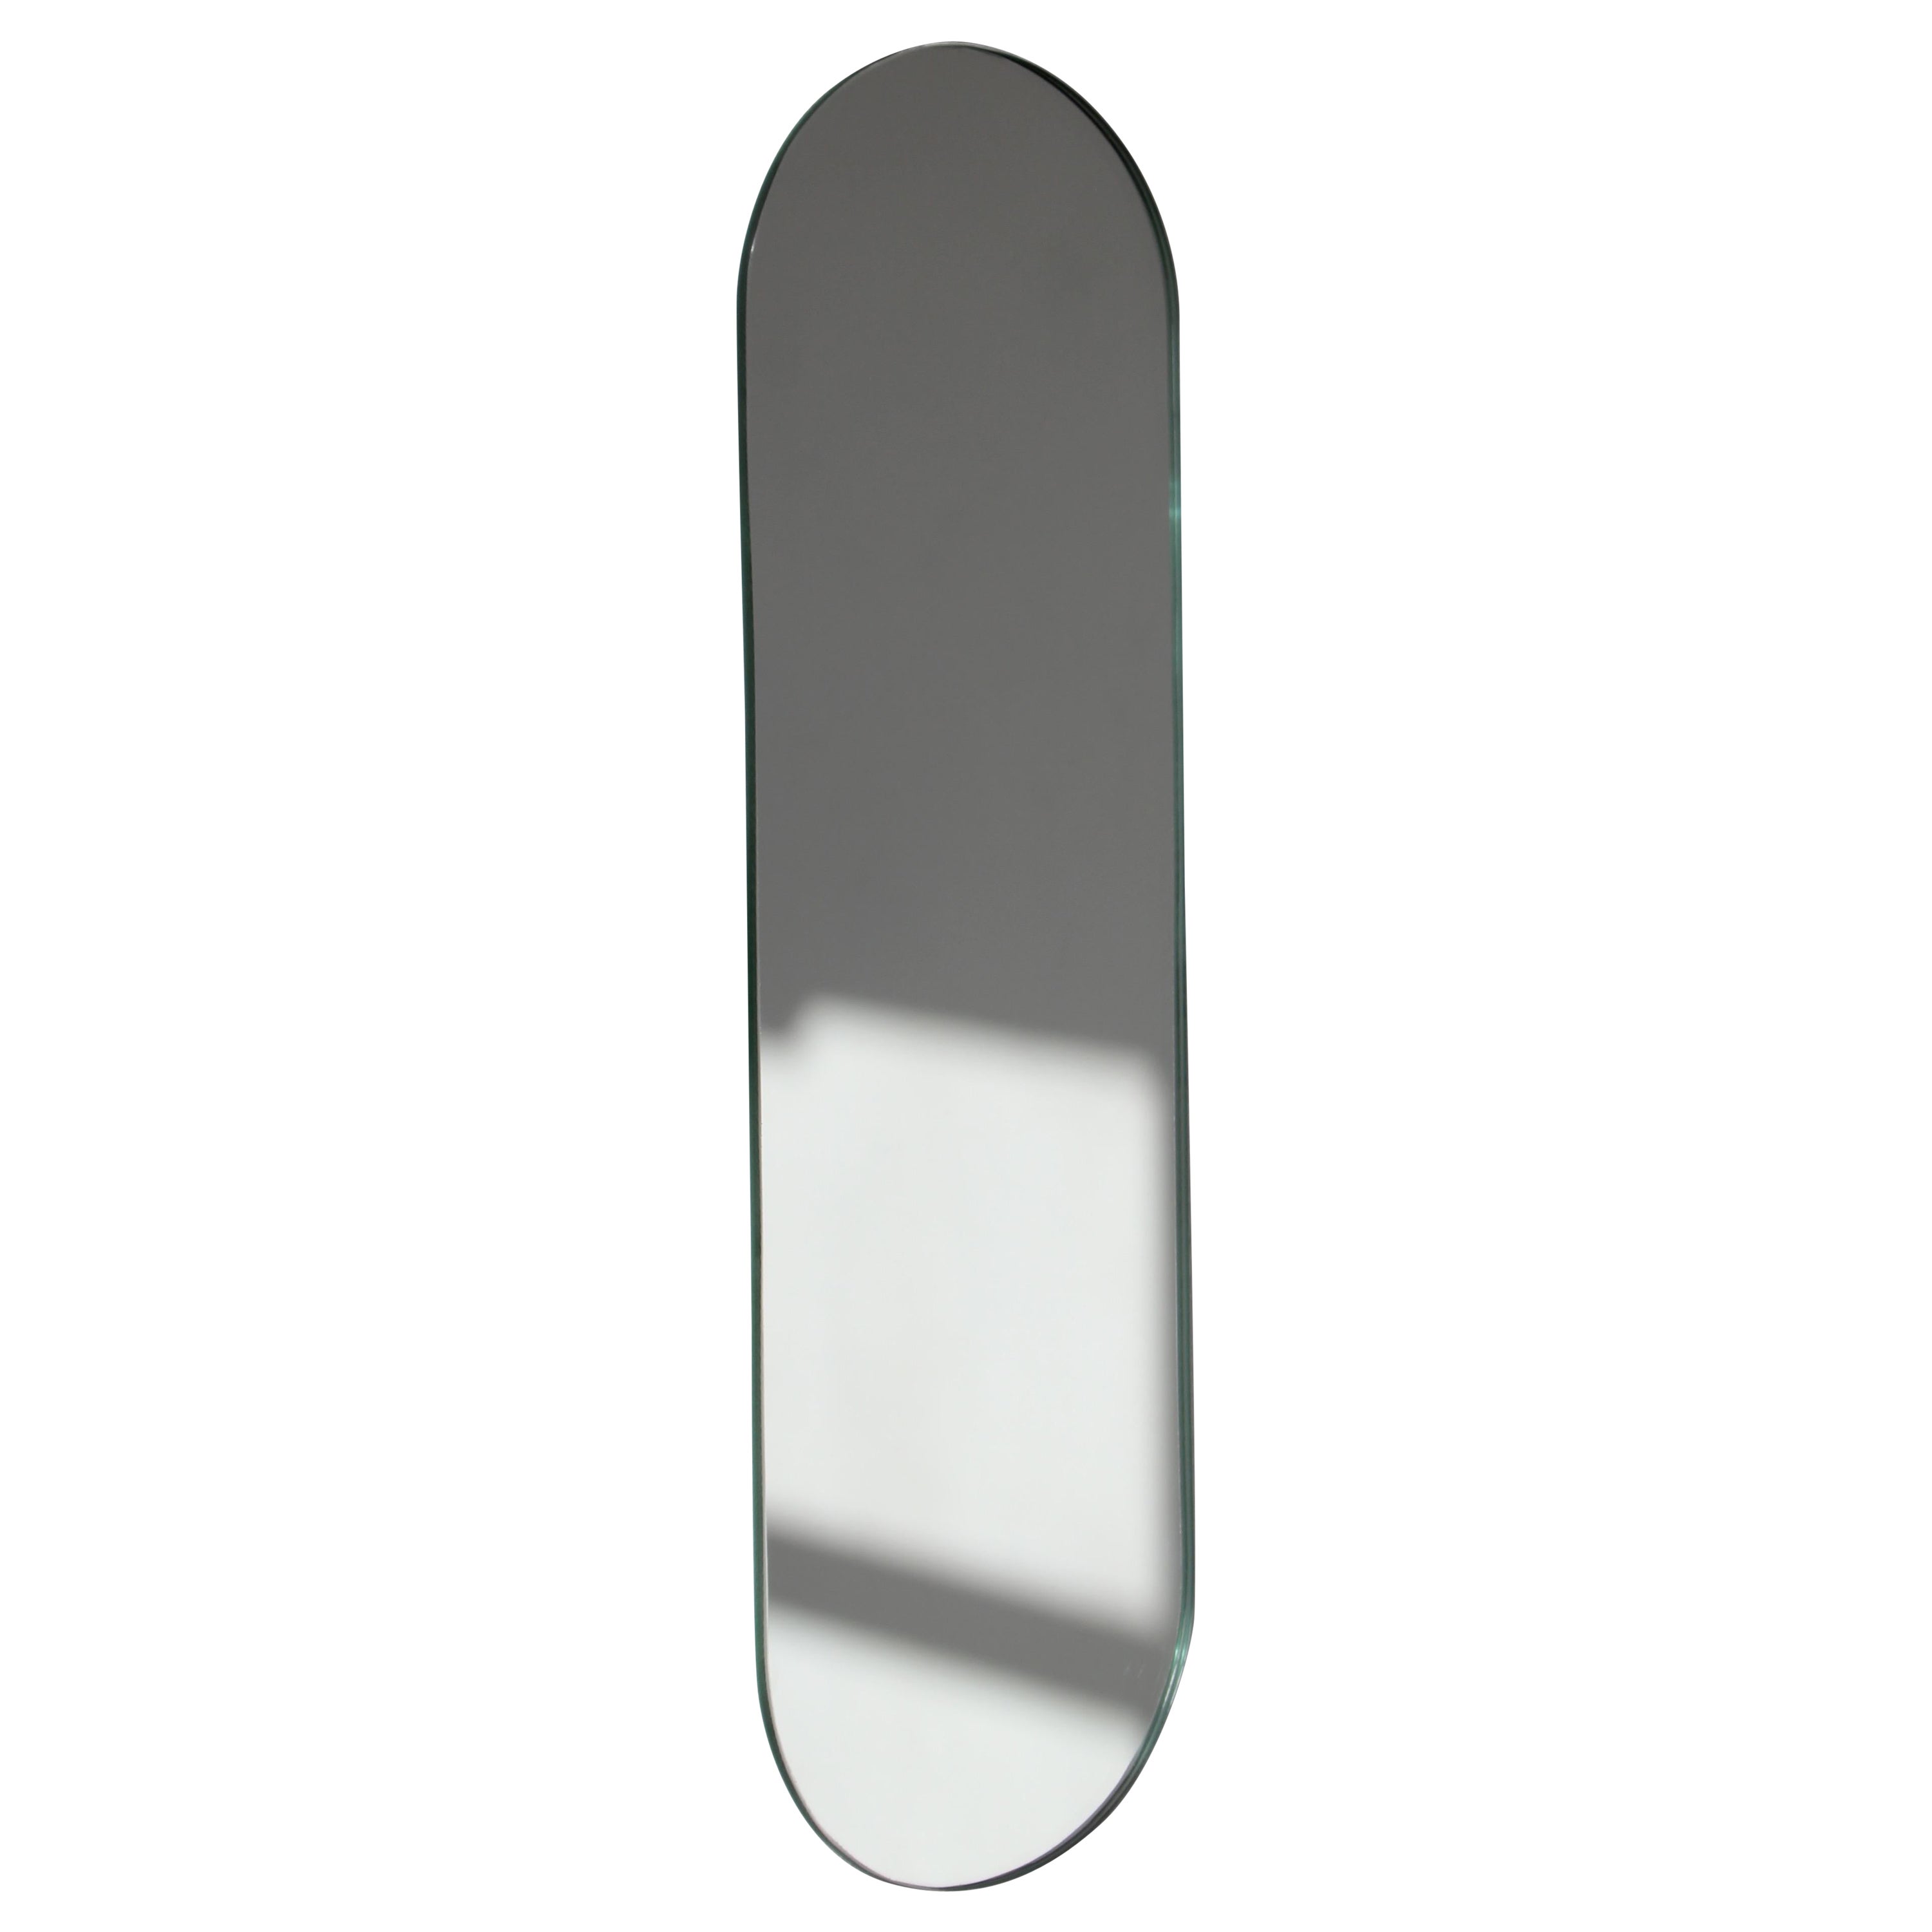 Capsula Capsule shaped Minimalist Frameless Customisable Mirror, Small